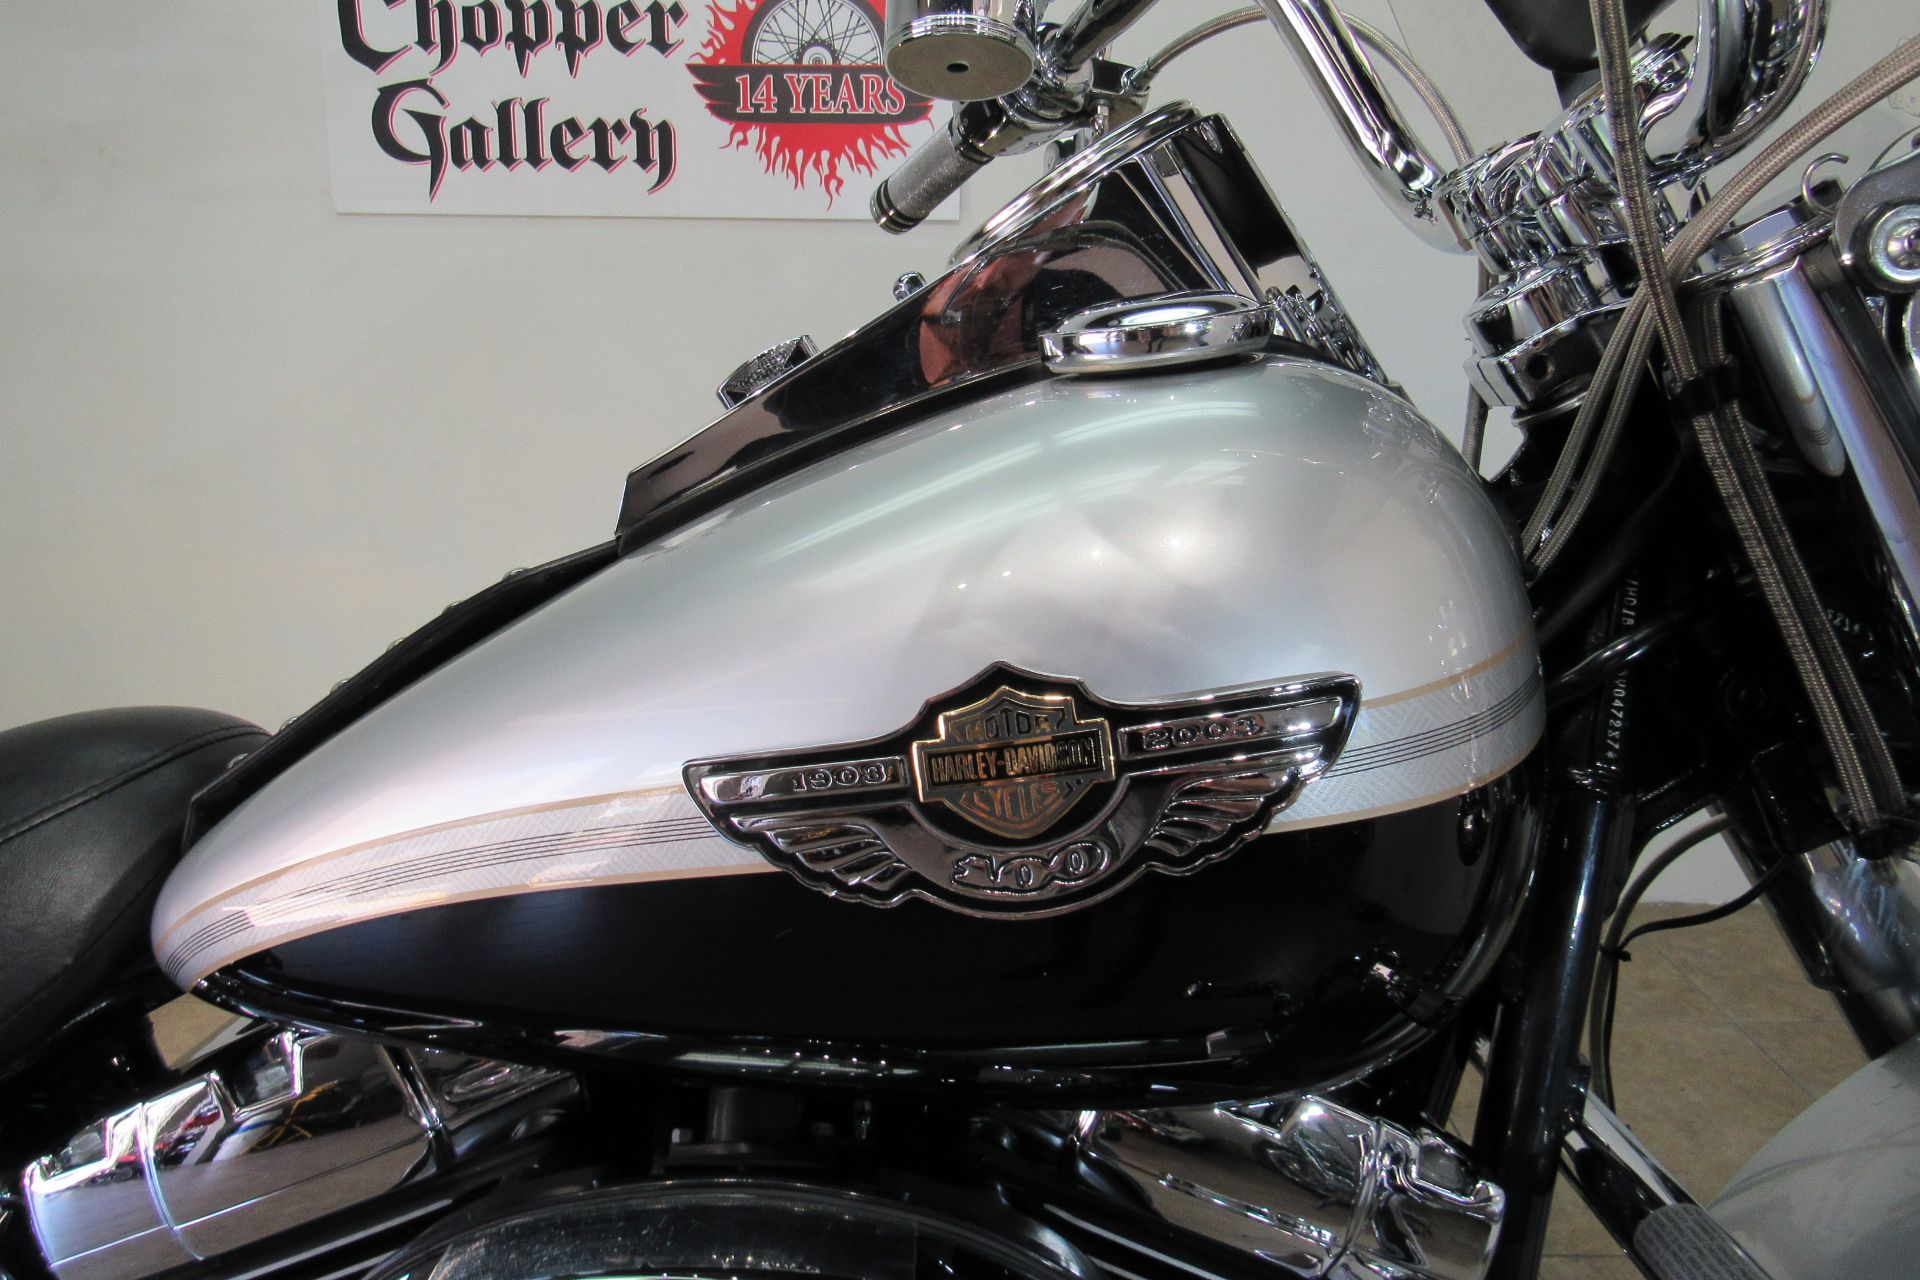 2003 Harley-Davidson Heritage Anniversary in Temecula, California - Photo 7